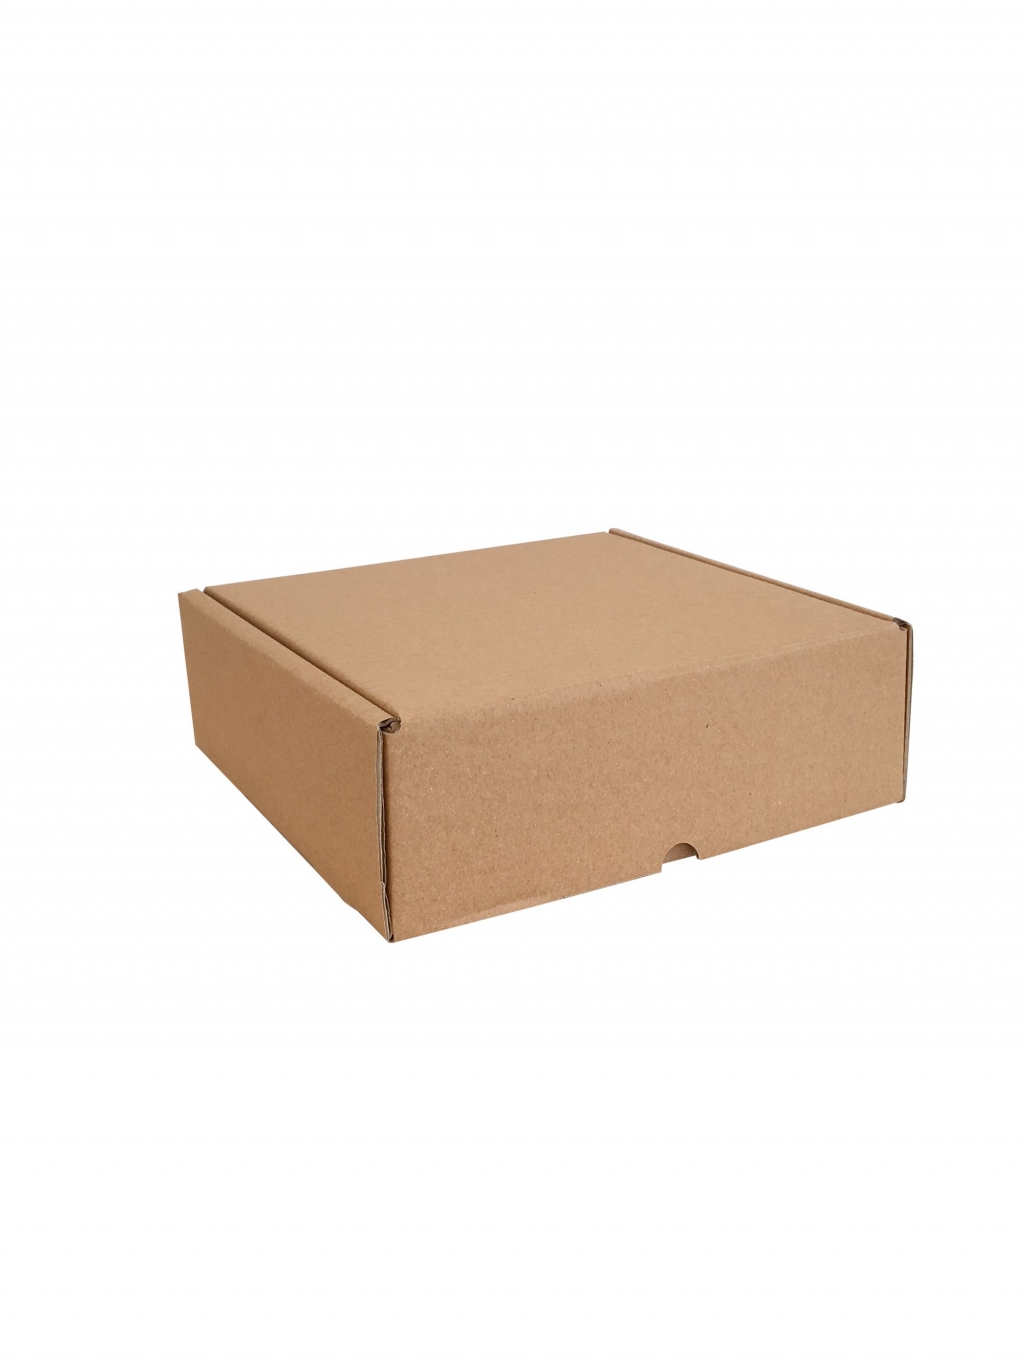 30 x 25 x 12 cm kapaklı kutu